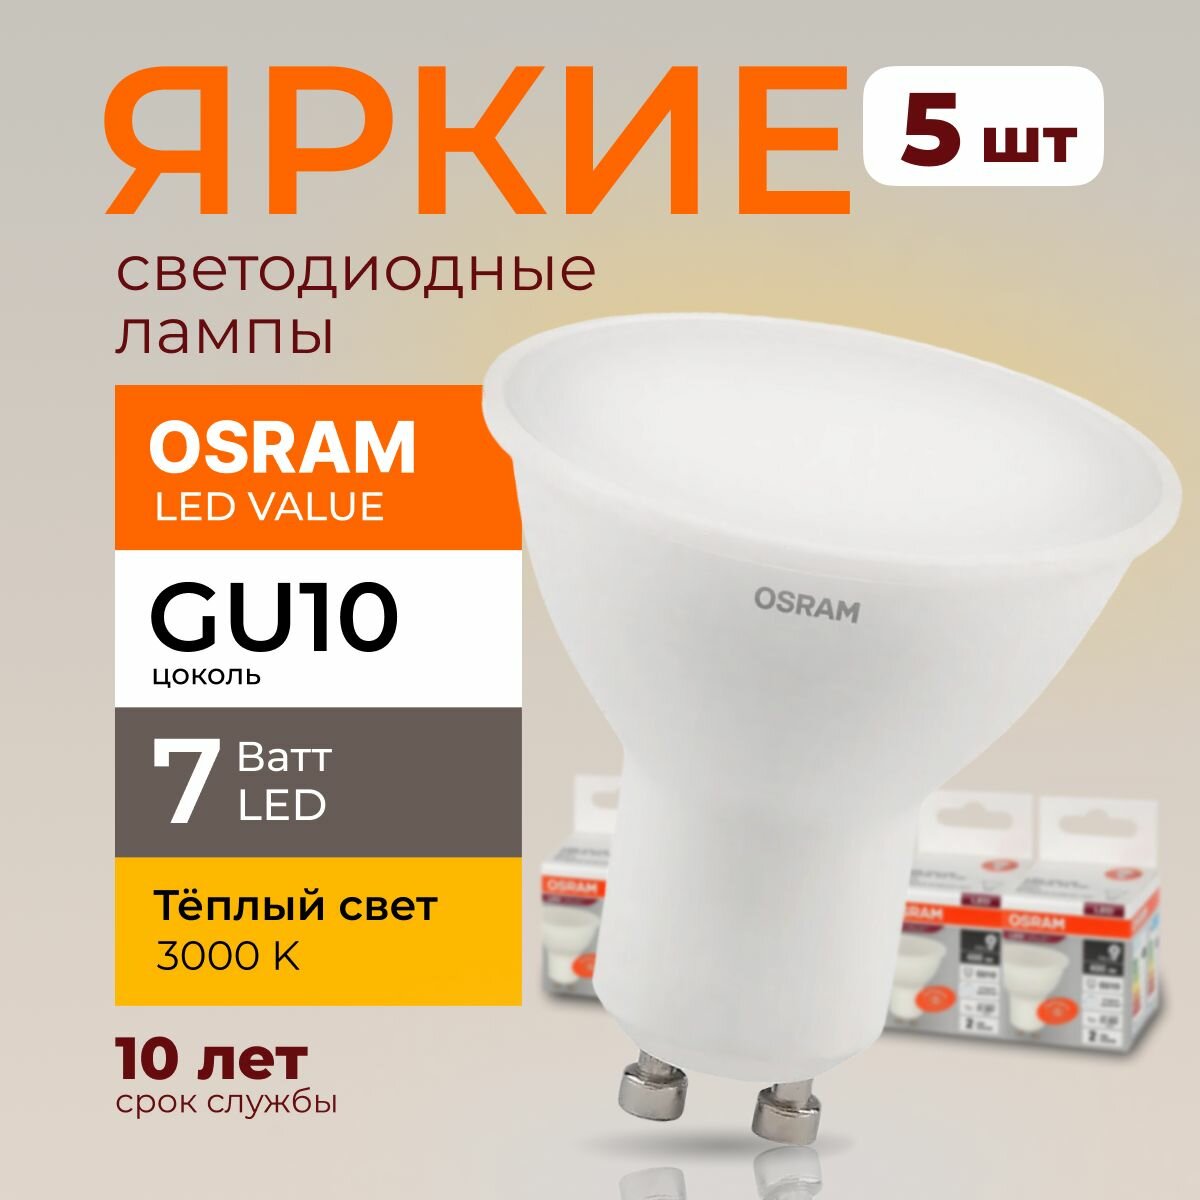 Светодиодная лампочка OSRAM GU10 7 Ватт 3000К теплый свет PAR16 спот 230V LED 830, 7W, 560lm, набор 5шт